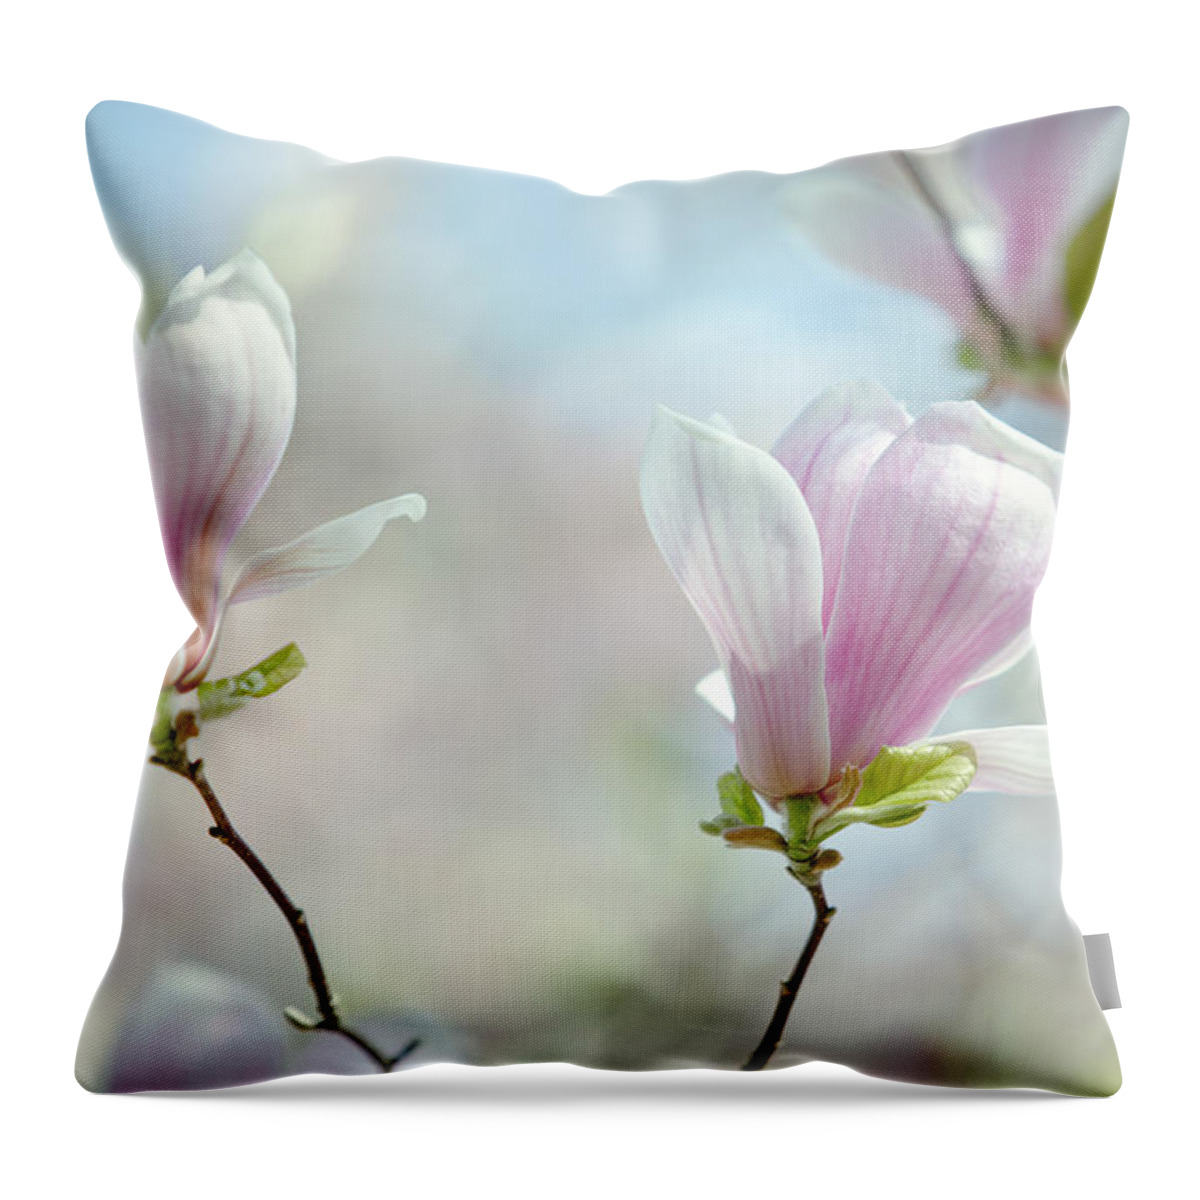 Magnolia Throw Pillow featuring the photograph Magnolia Flowers #16 by Nailia Schwarz